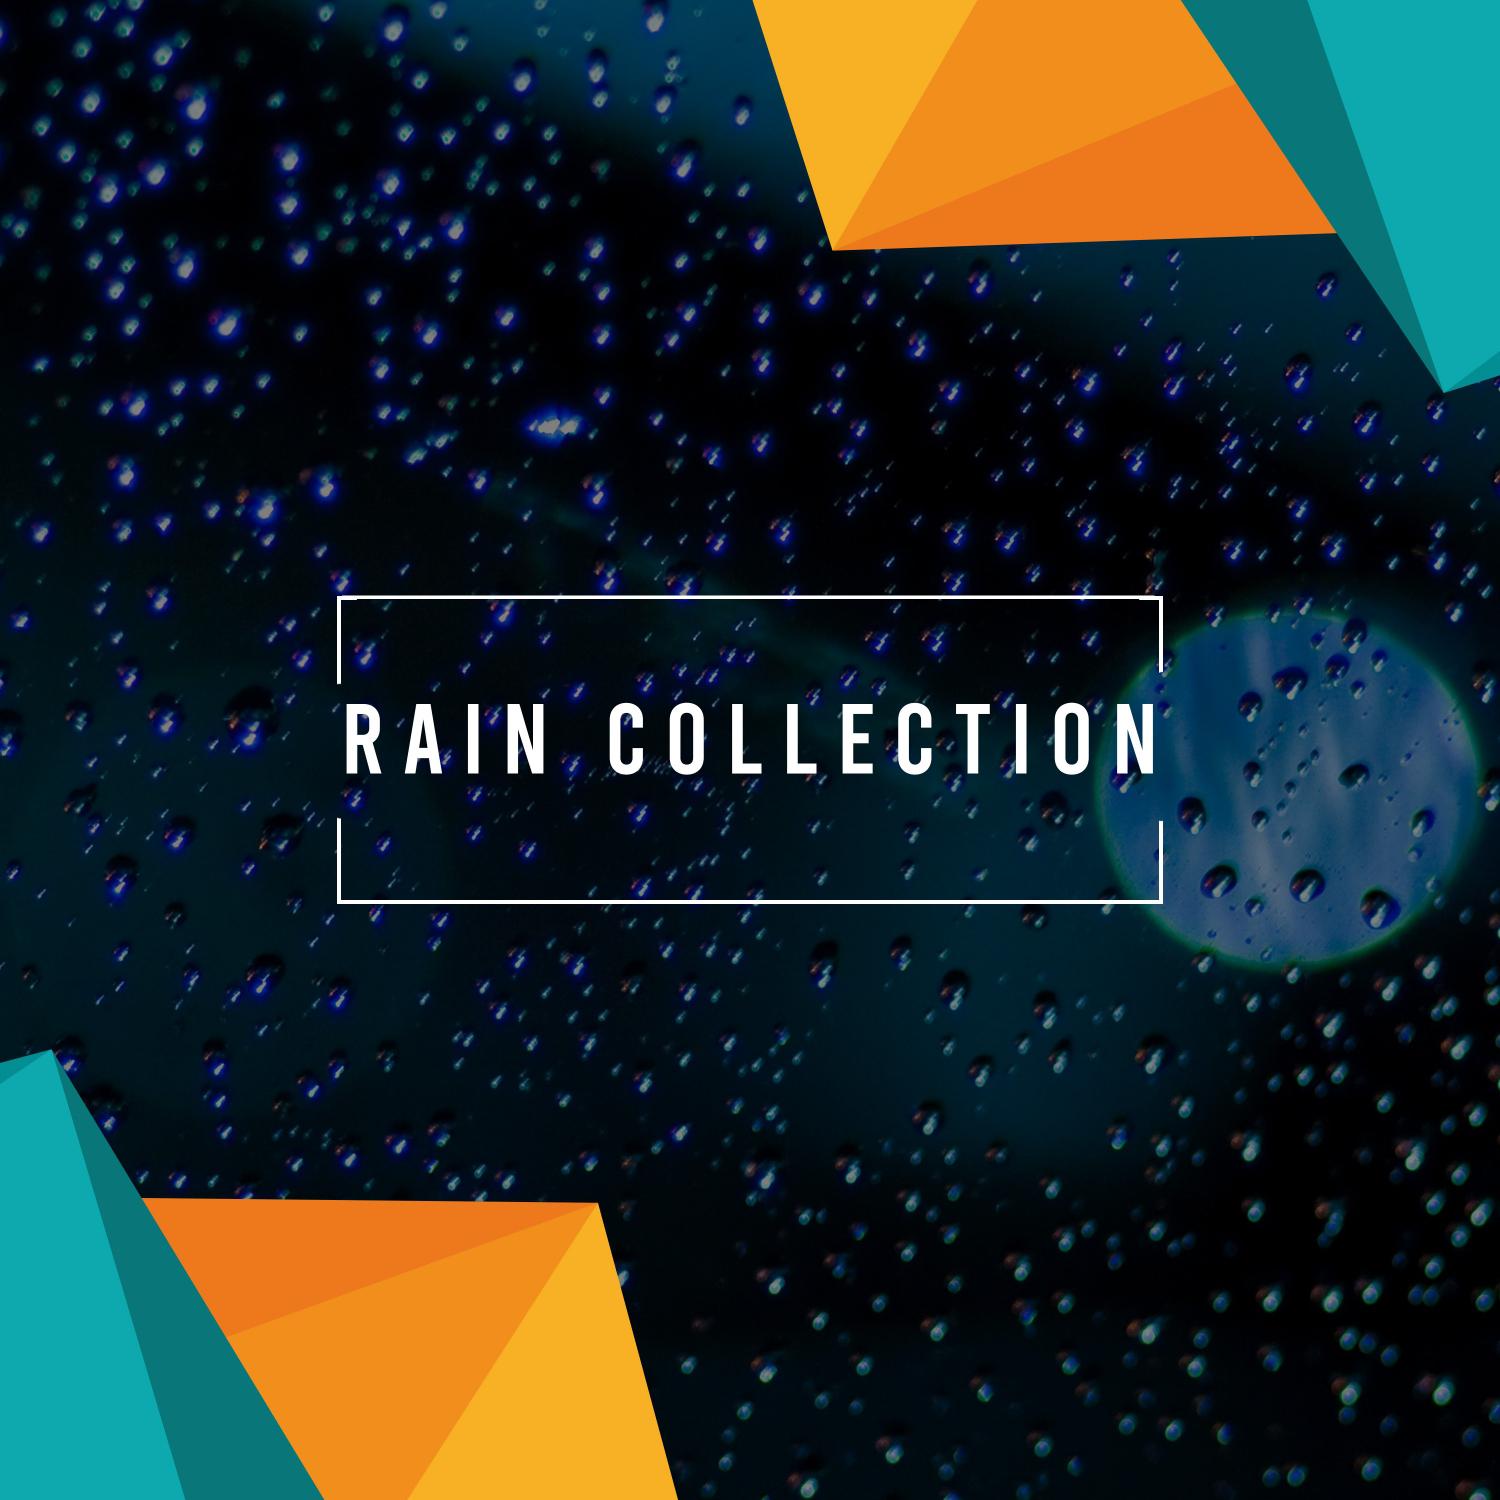 2017 Rain Sound Collection. Natural Rain Sounds for a Good Night's Sleep